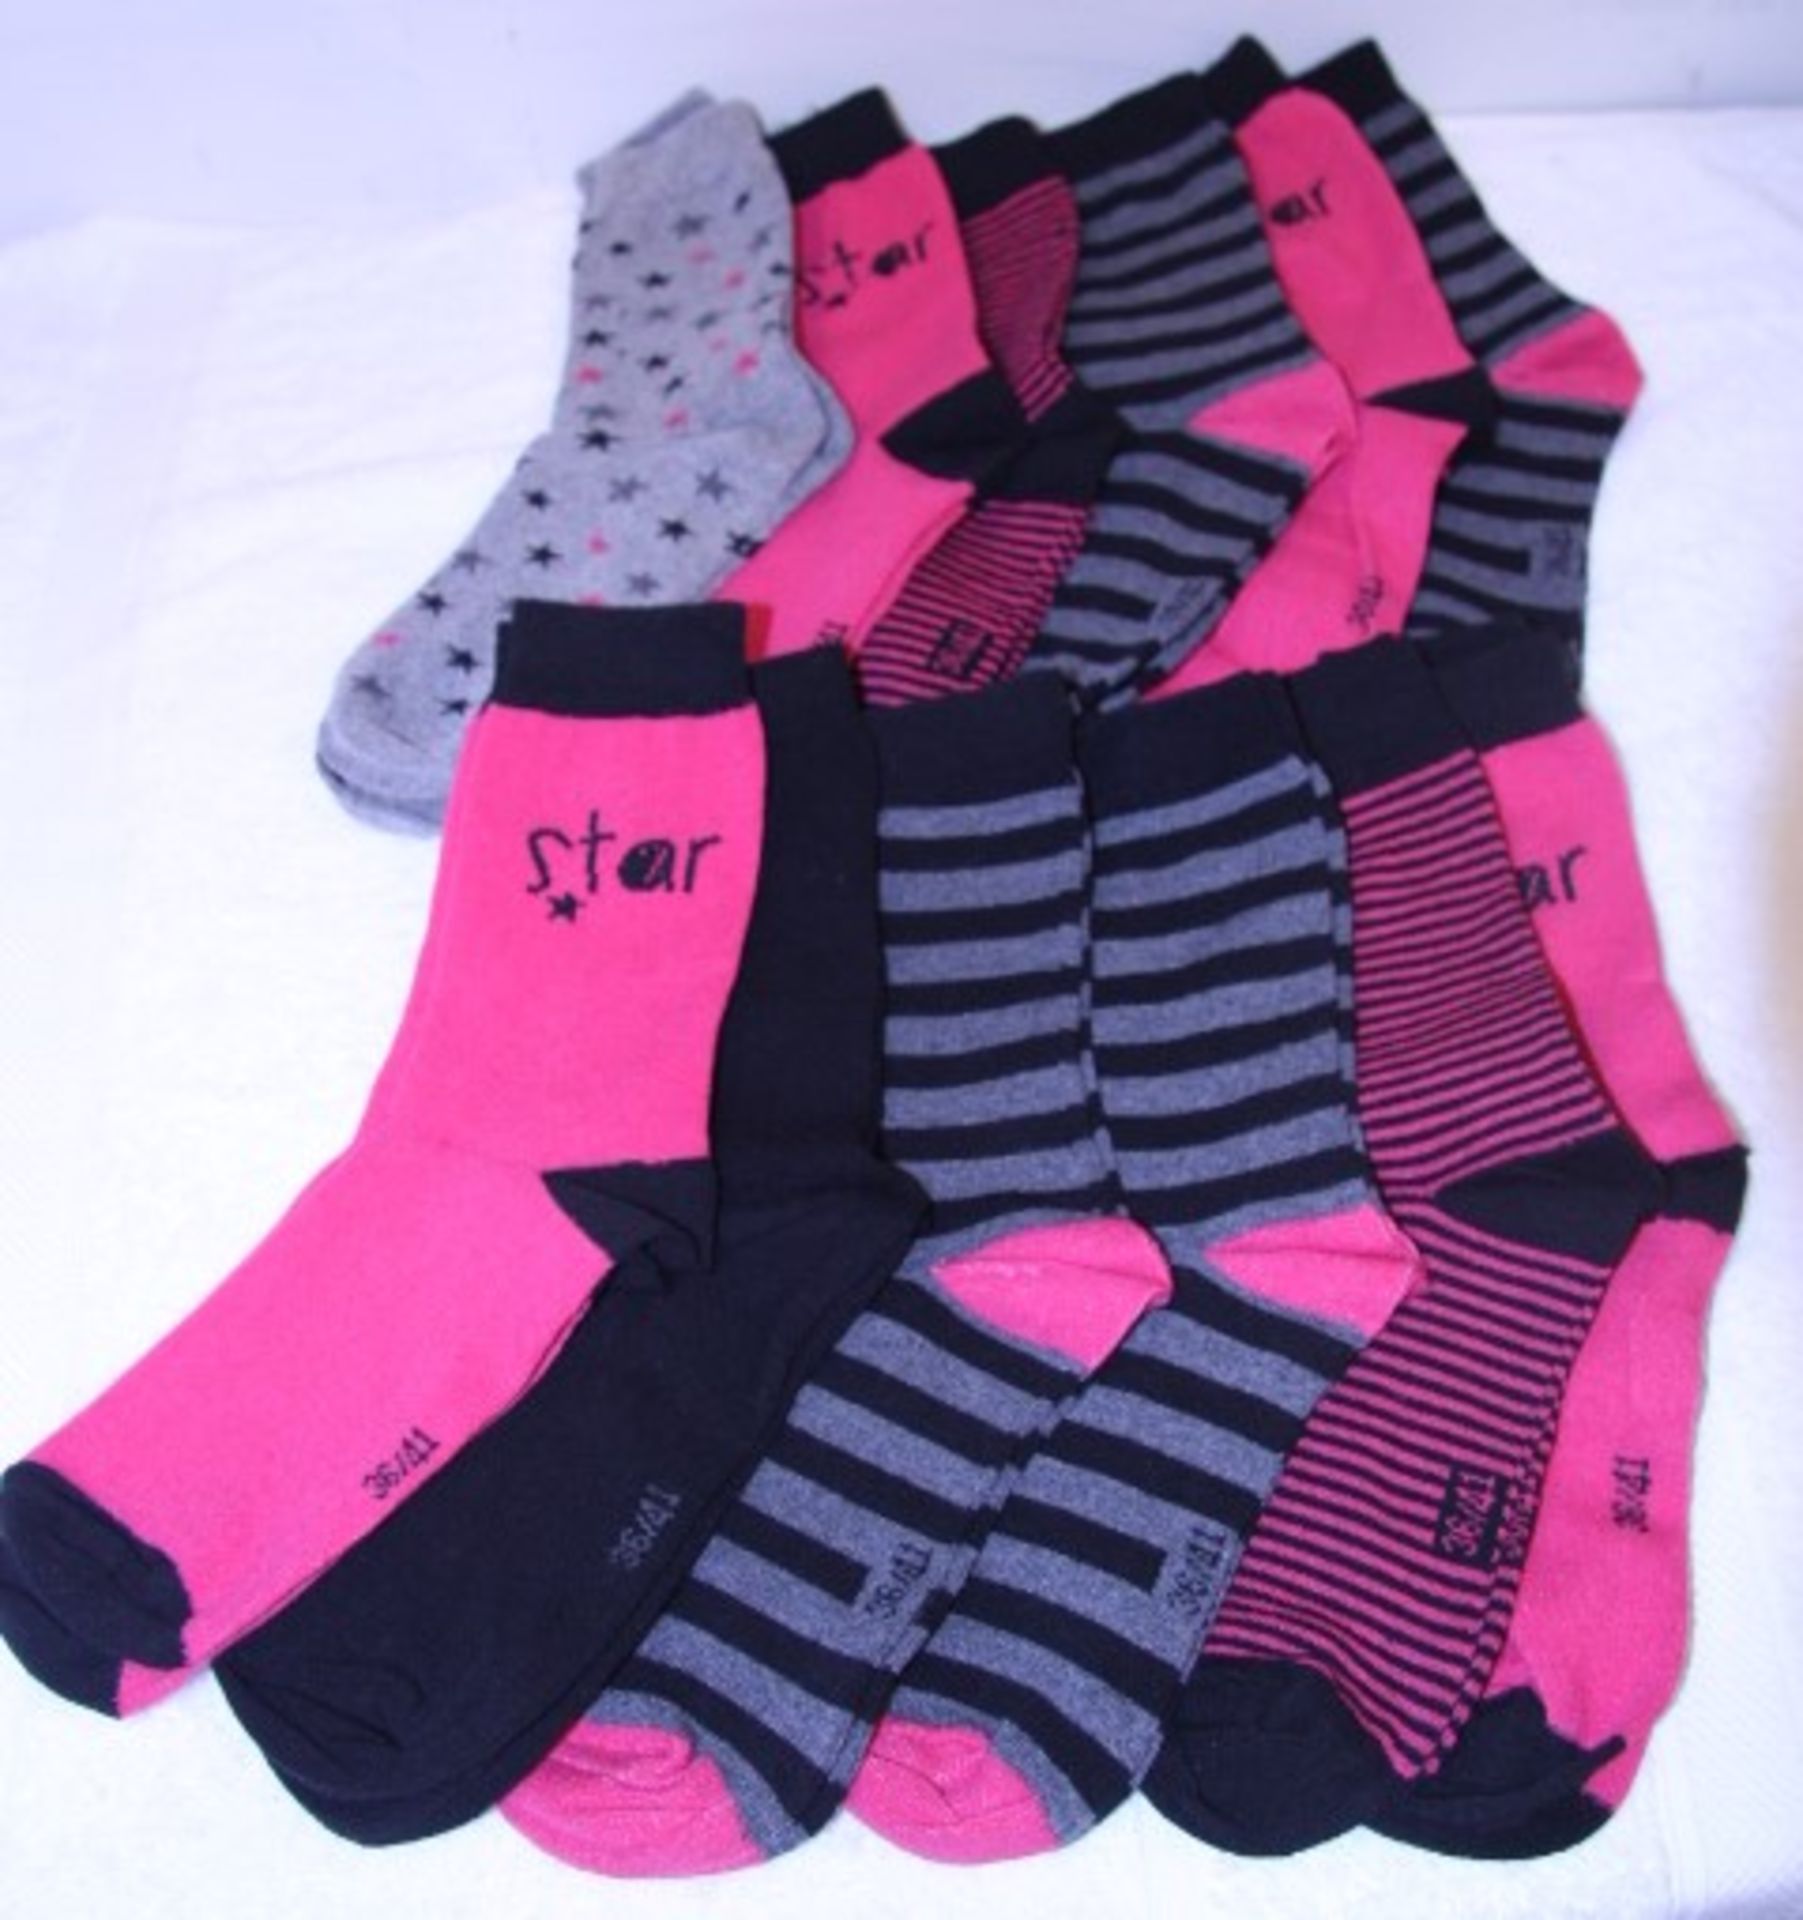 V *TRADE QTY* Brand New A Lot of Twelve Pairs Ladies Fashion Socks (Designs May Vary) X 3 YOUR BID